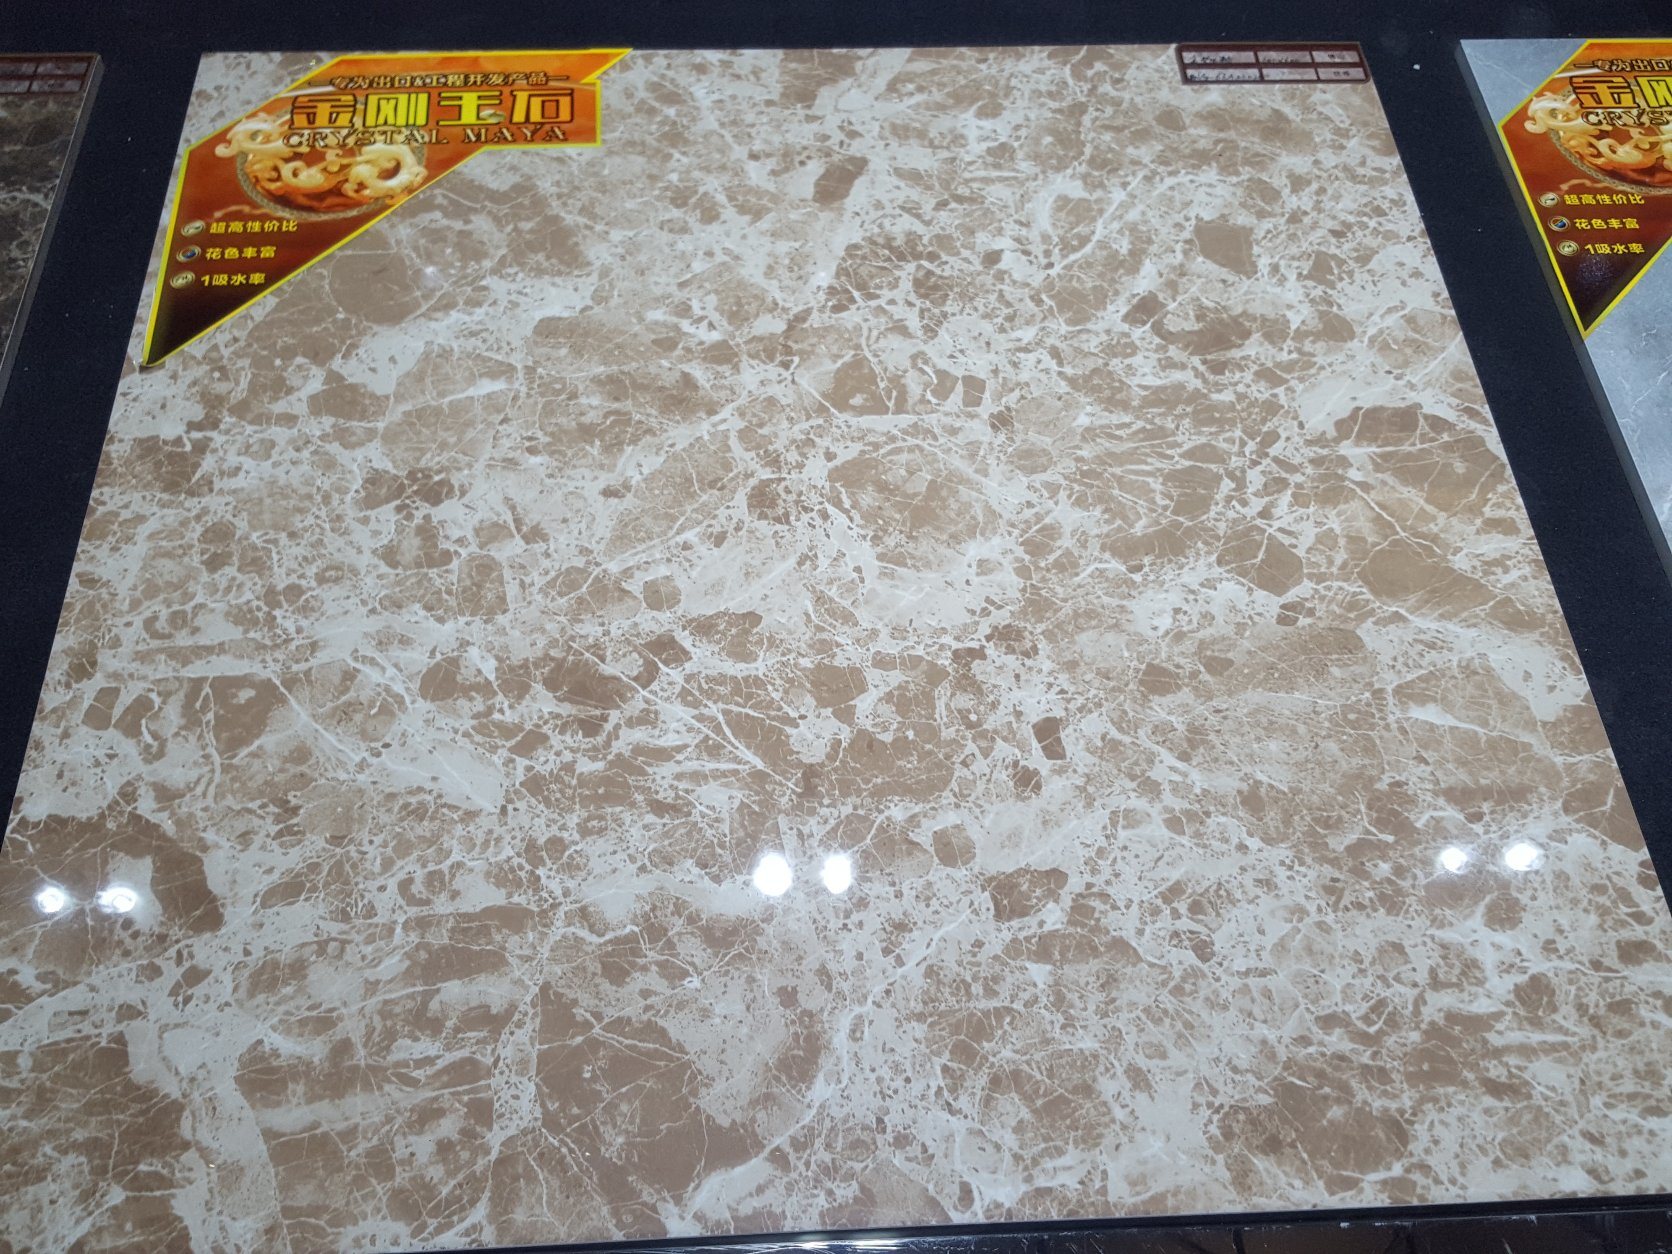 66A2302q Glazed Porcelain Tile/Floor Tile/Wall Tile/Marble Tile/600*600 with 1% Water Absorption